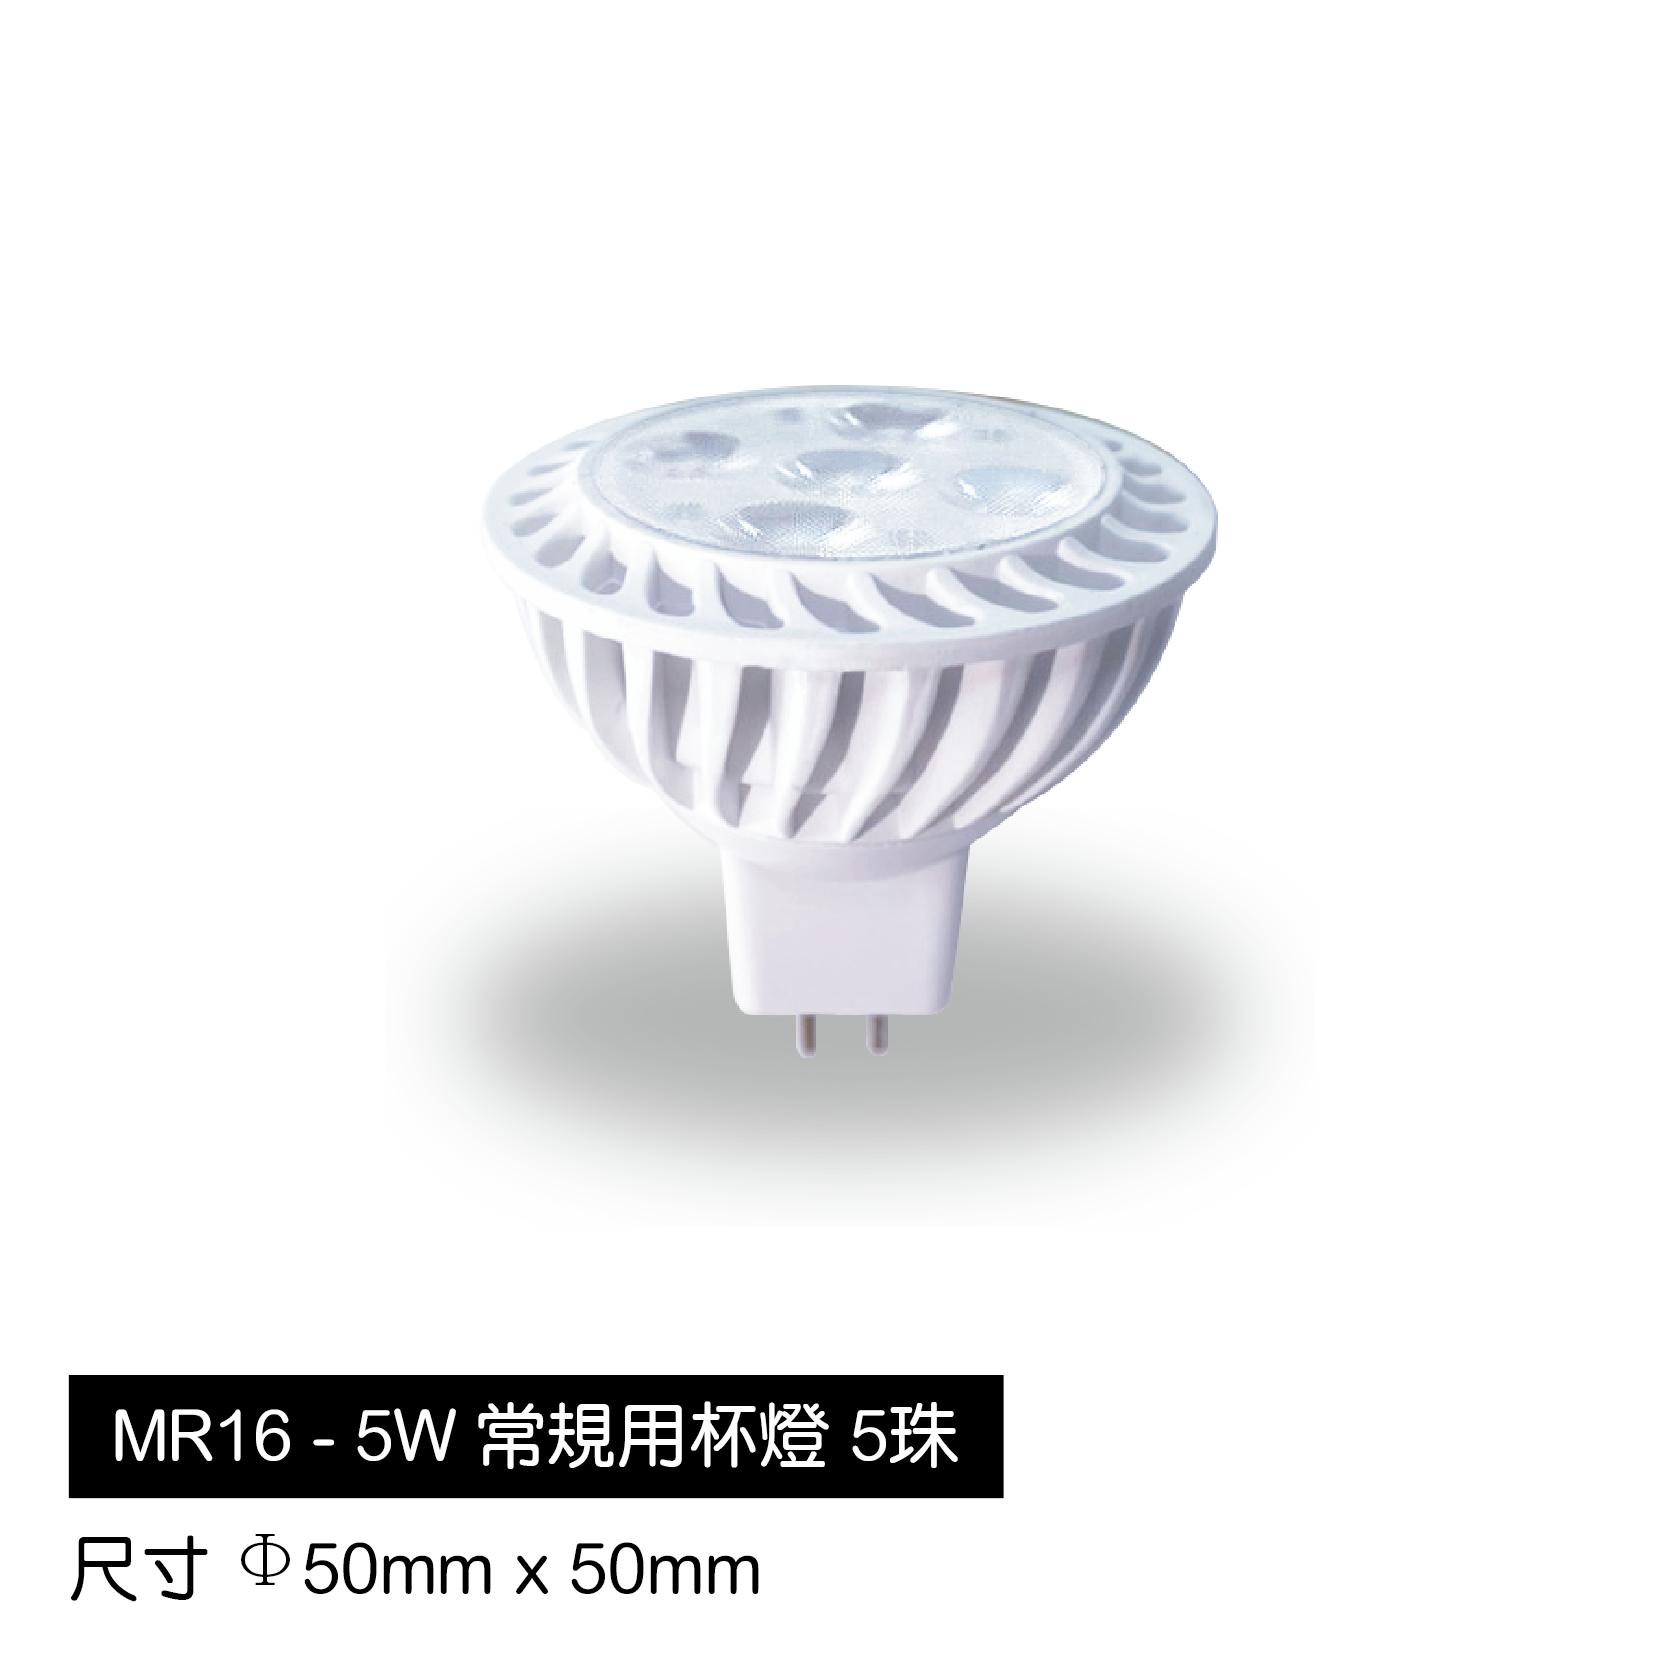 MR16-5W杯燈[GU5.3]